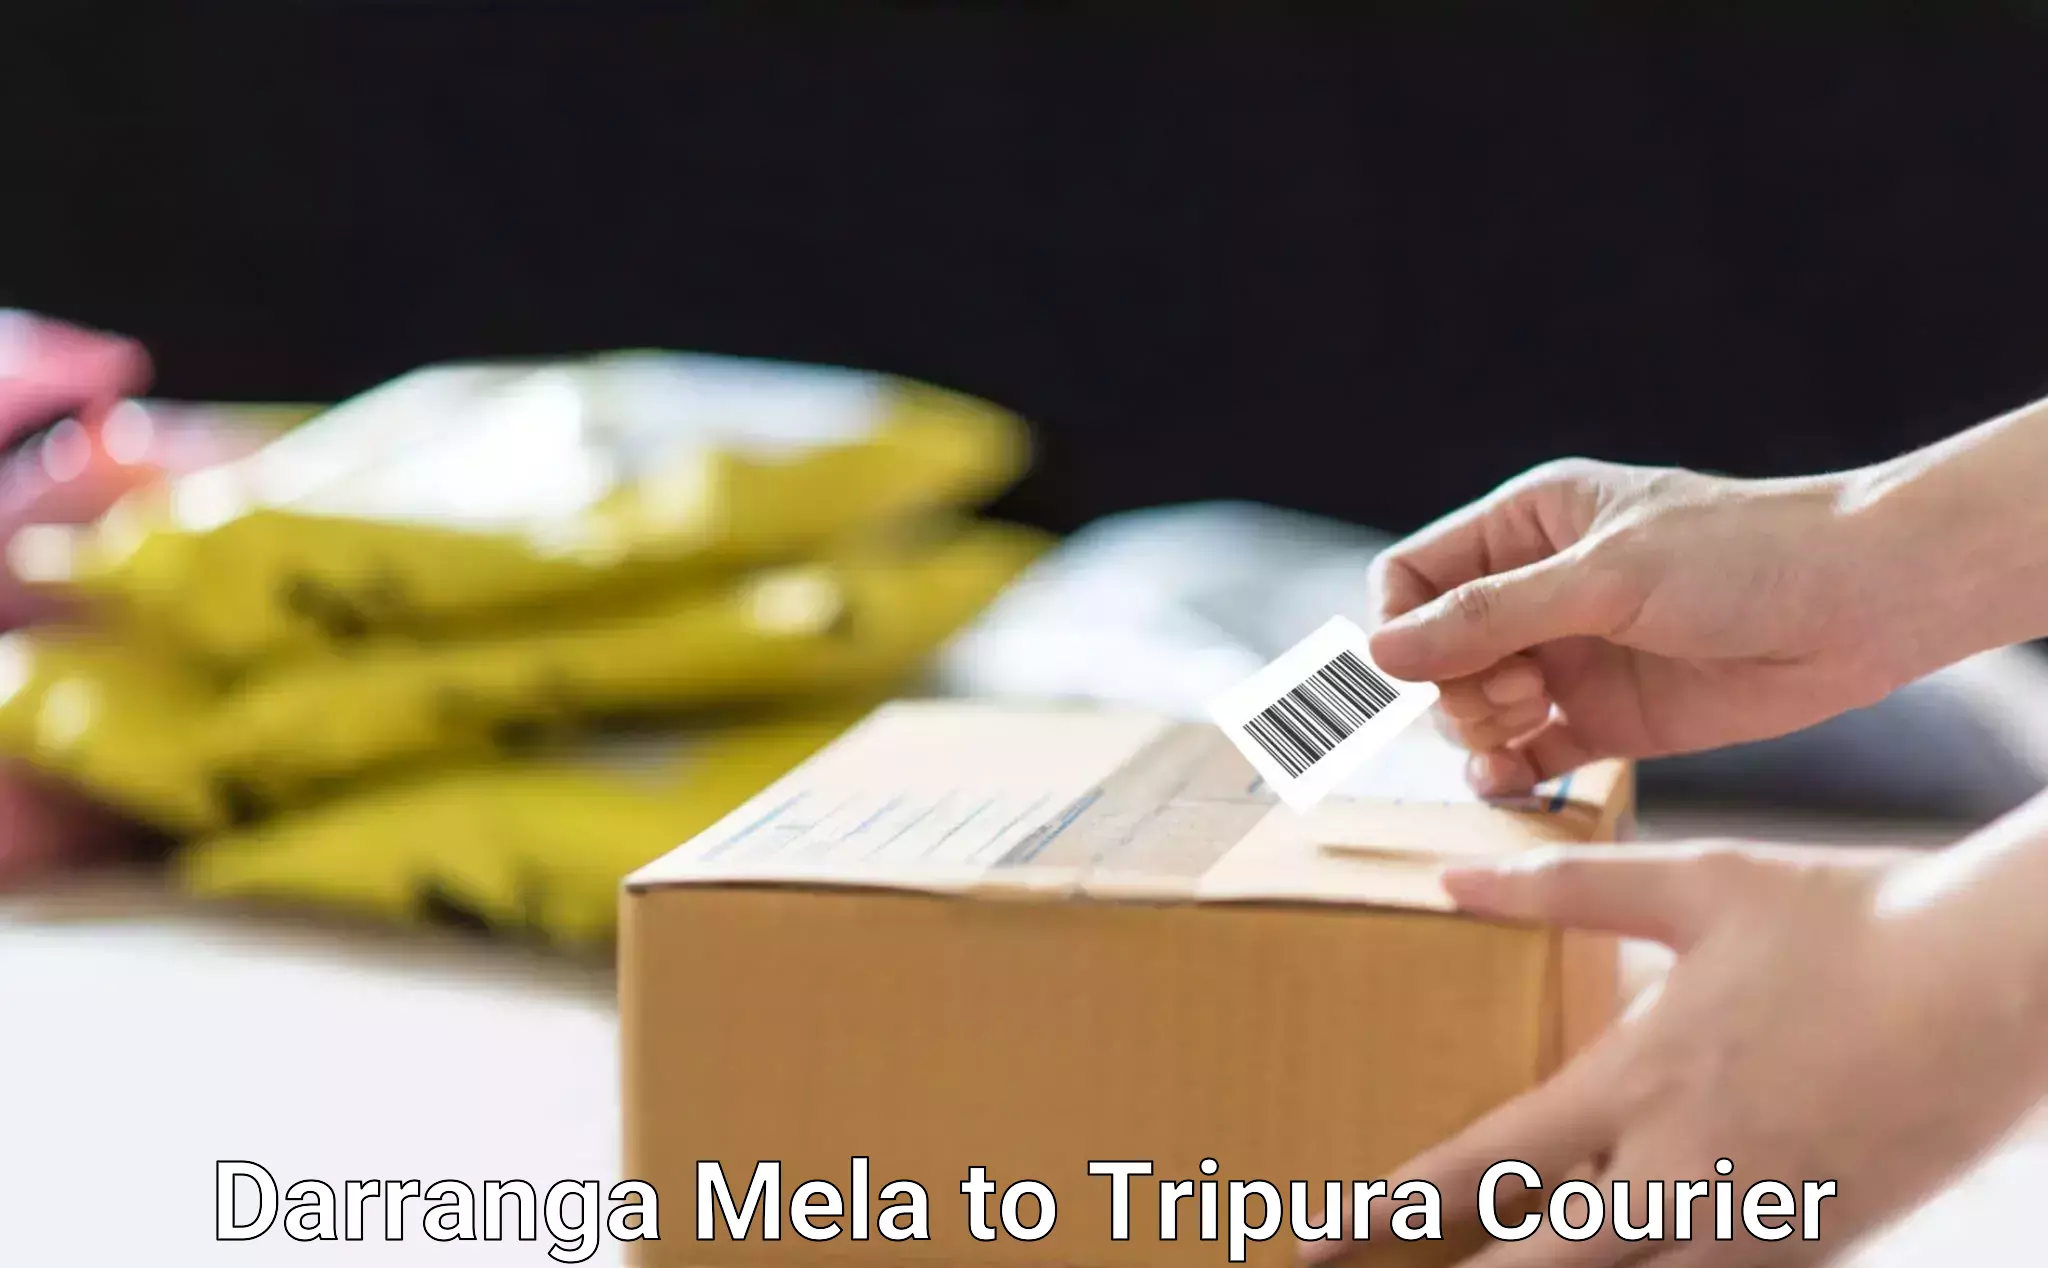 Overnight delivery Darranga Mela to Udaipur Tripura